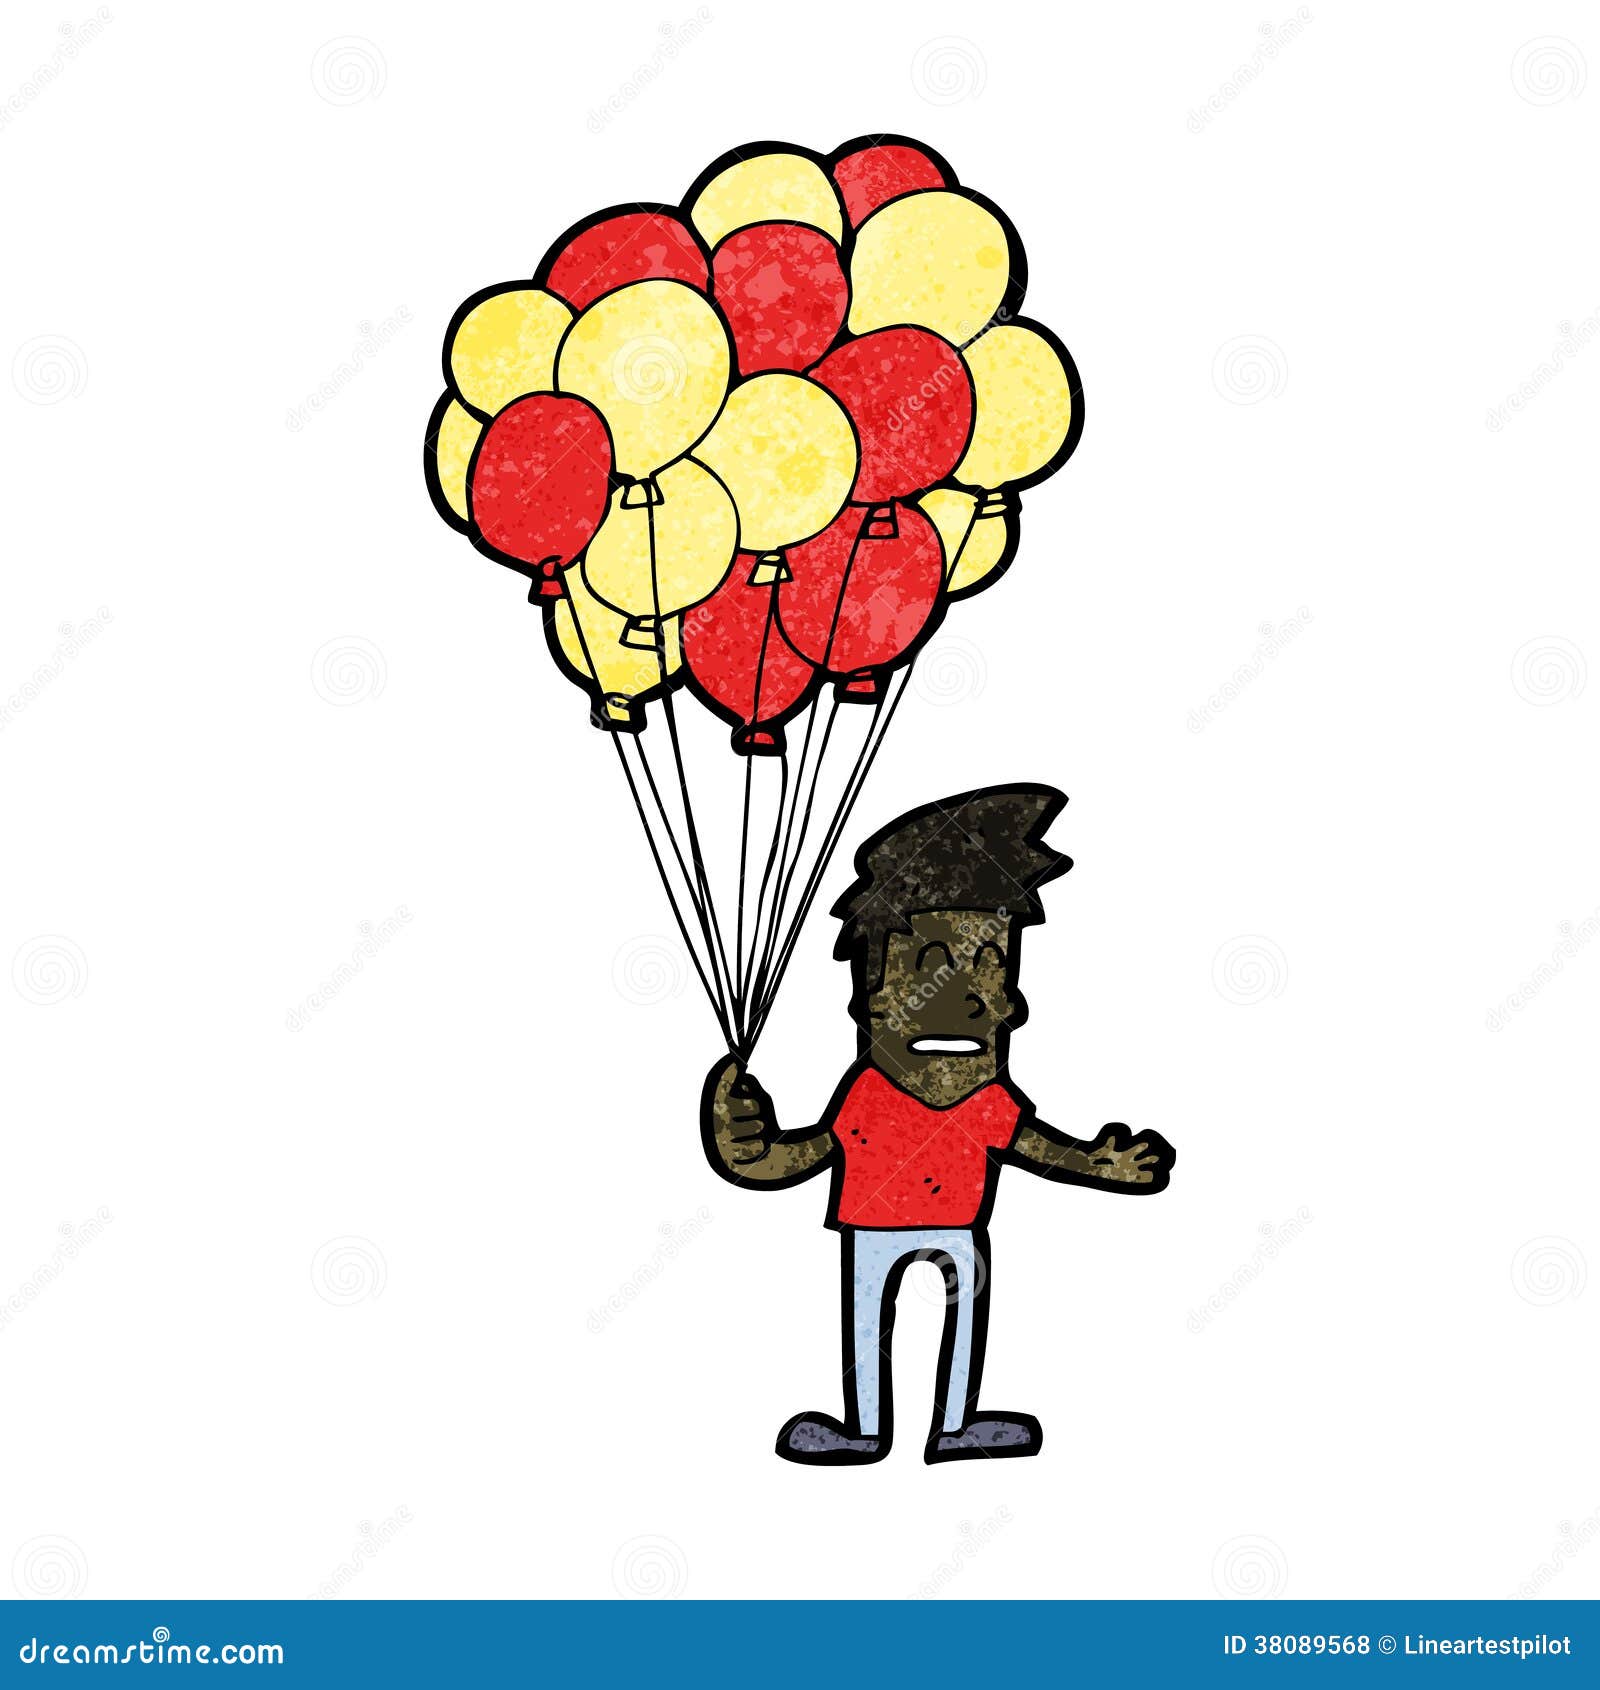 balloon seller clipart - photo #26